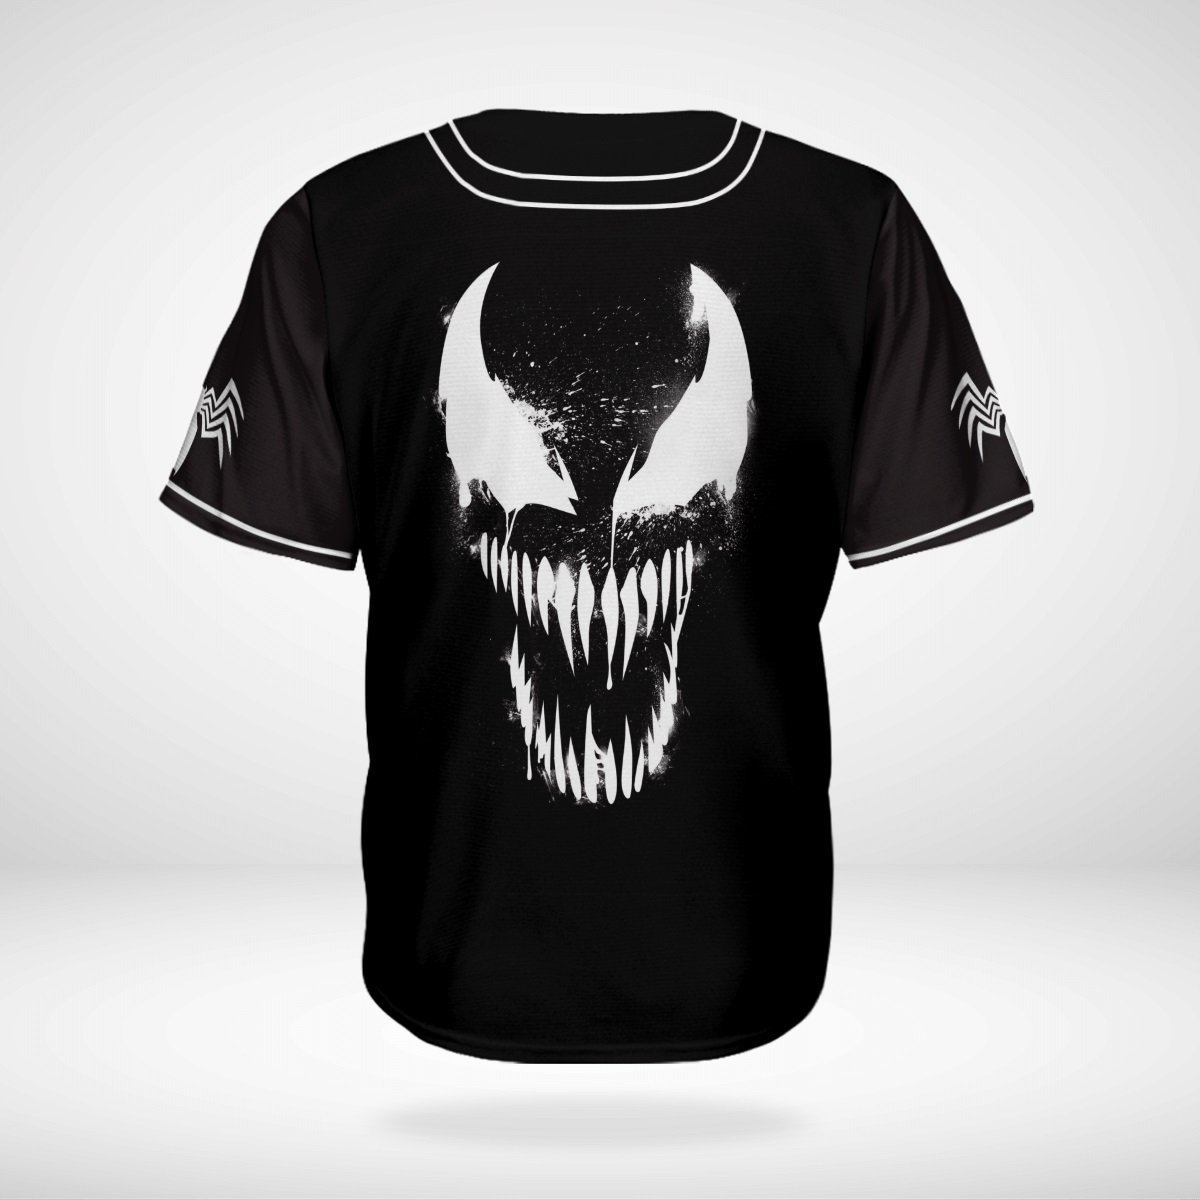 Venom baseball jersey shirt - Picture 2